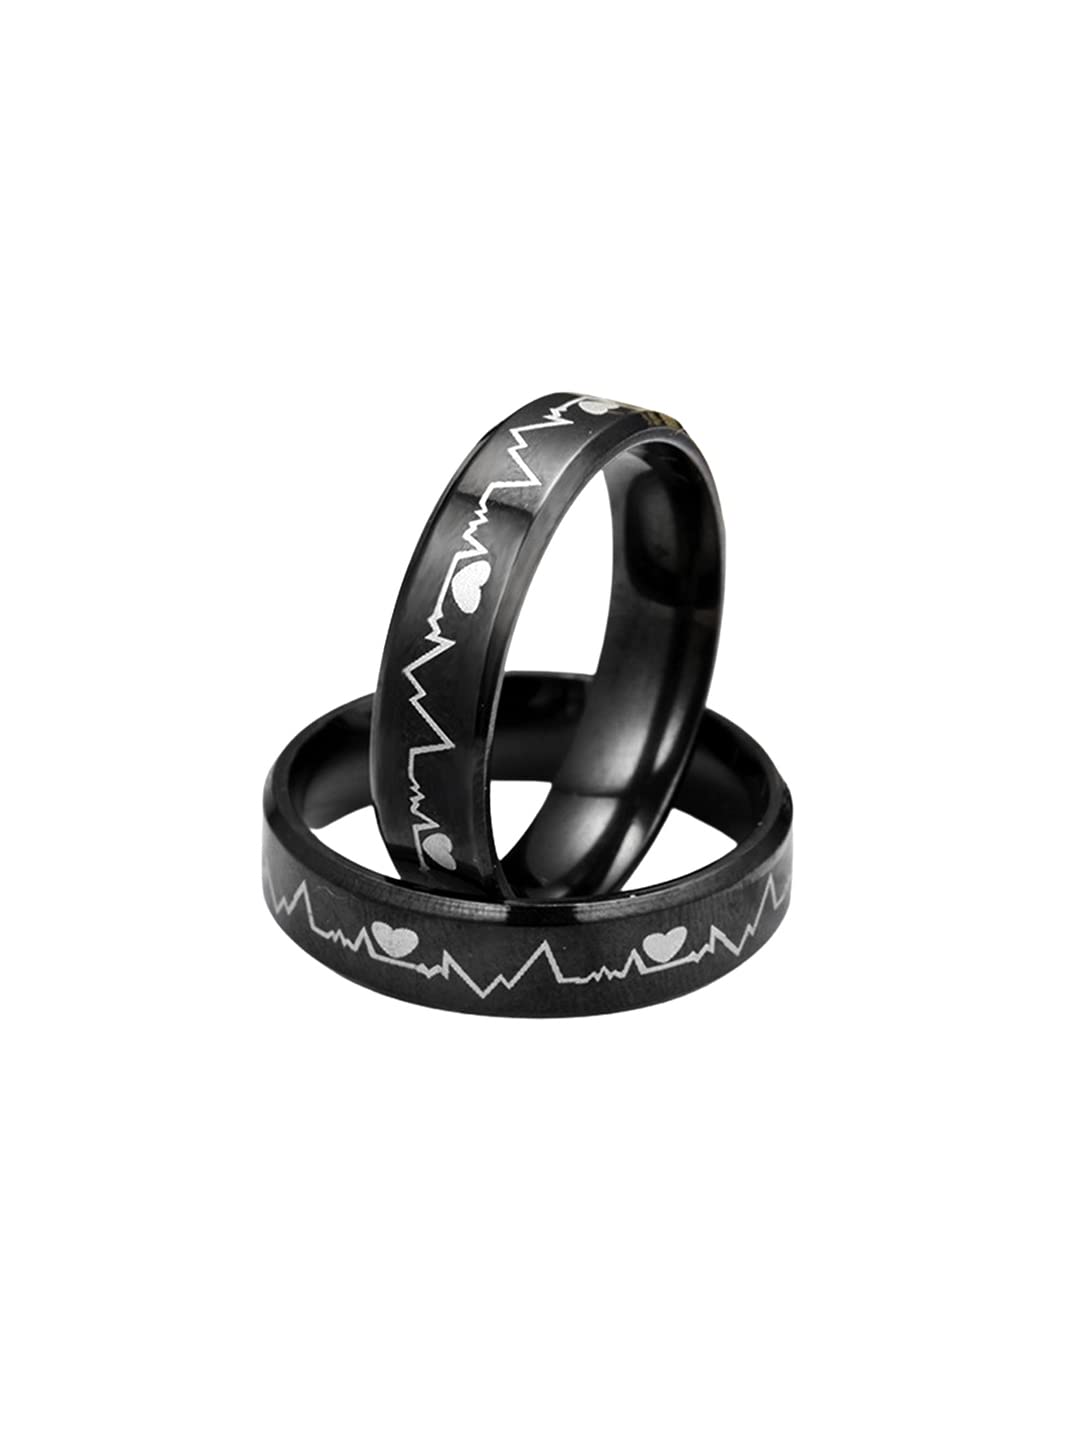 New Couple Engagement Rings 18K Black GP&Titanium steel Wedding Promise  Rings | eBay